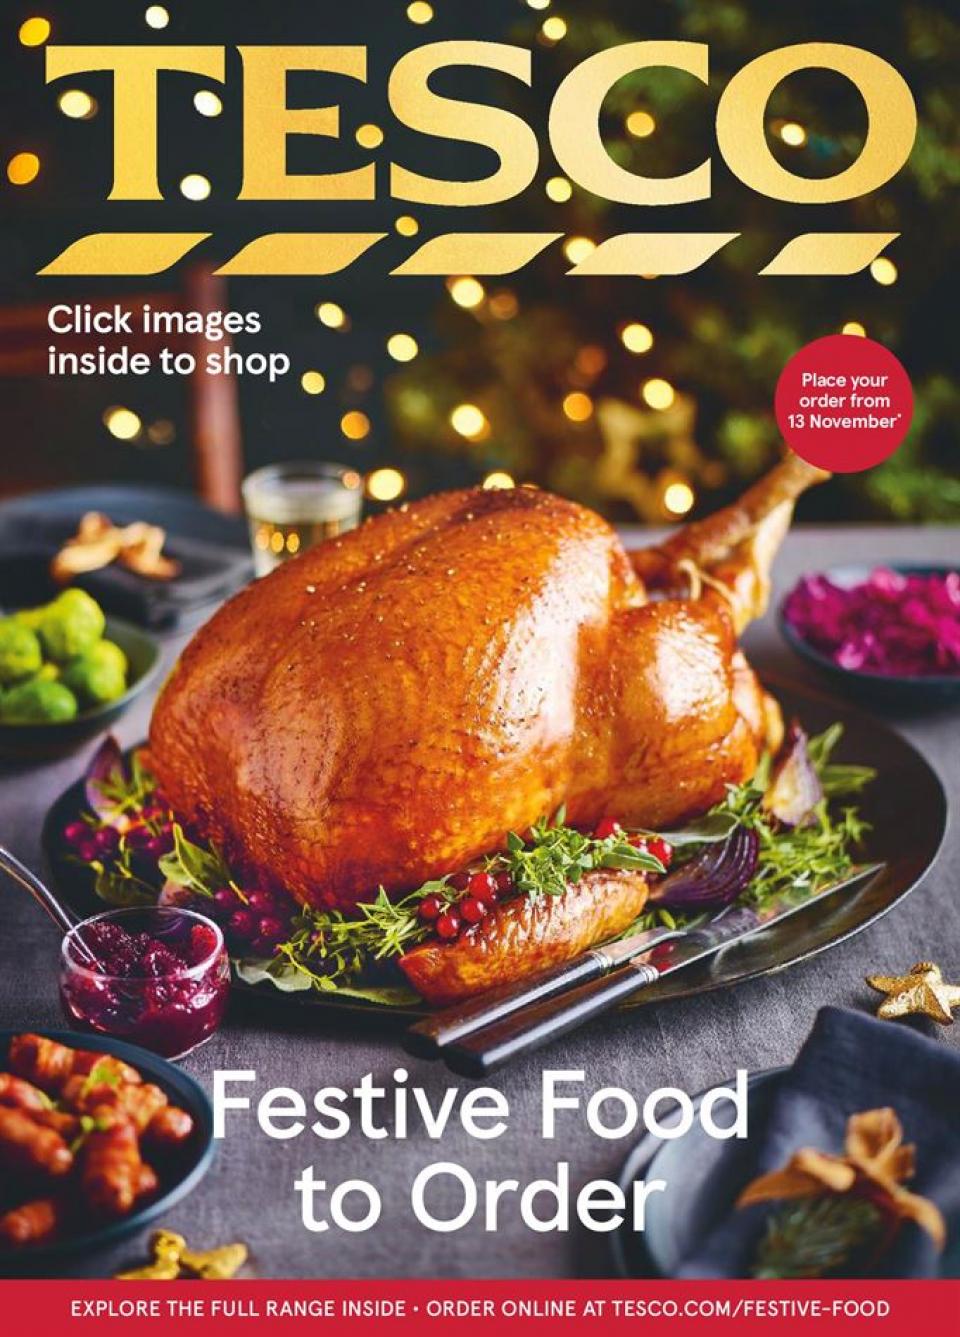 tesco offers festive food to order 13 november 2020